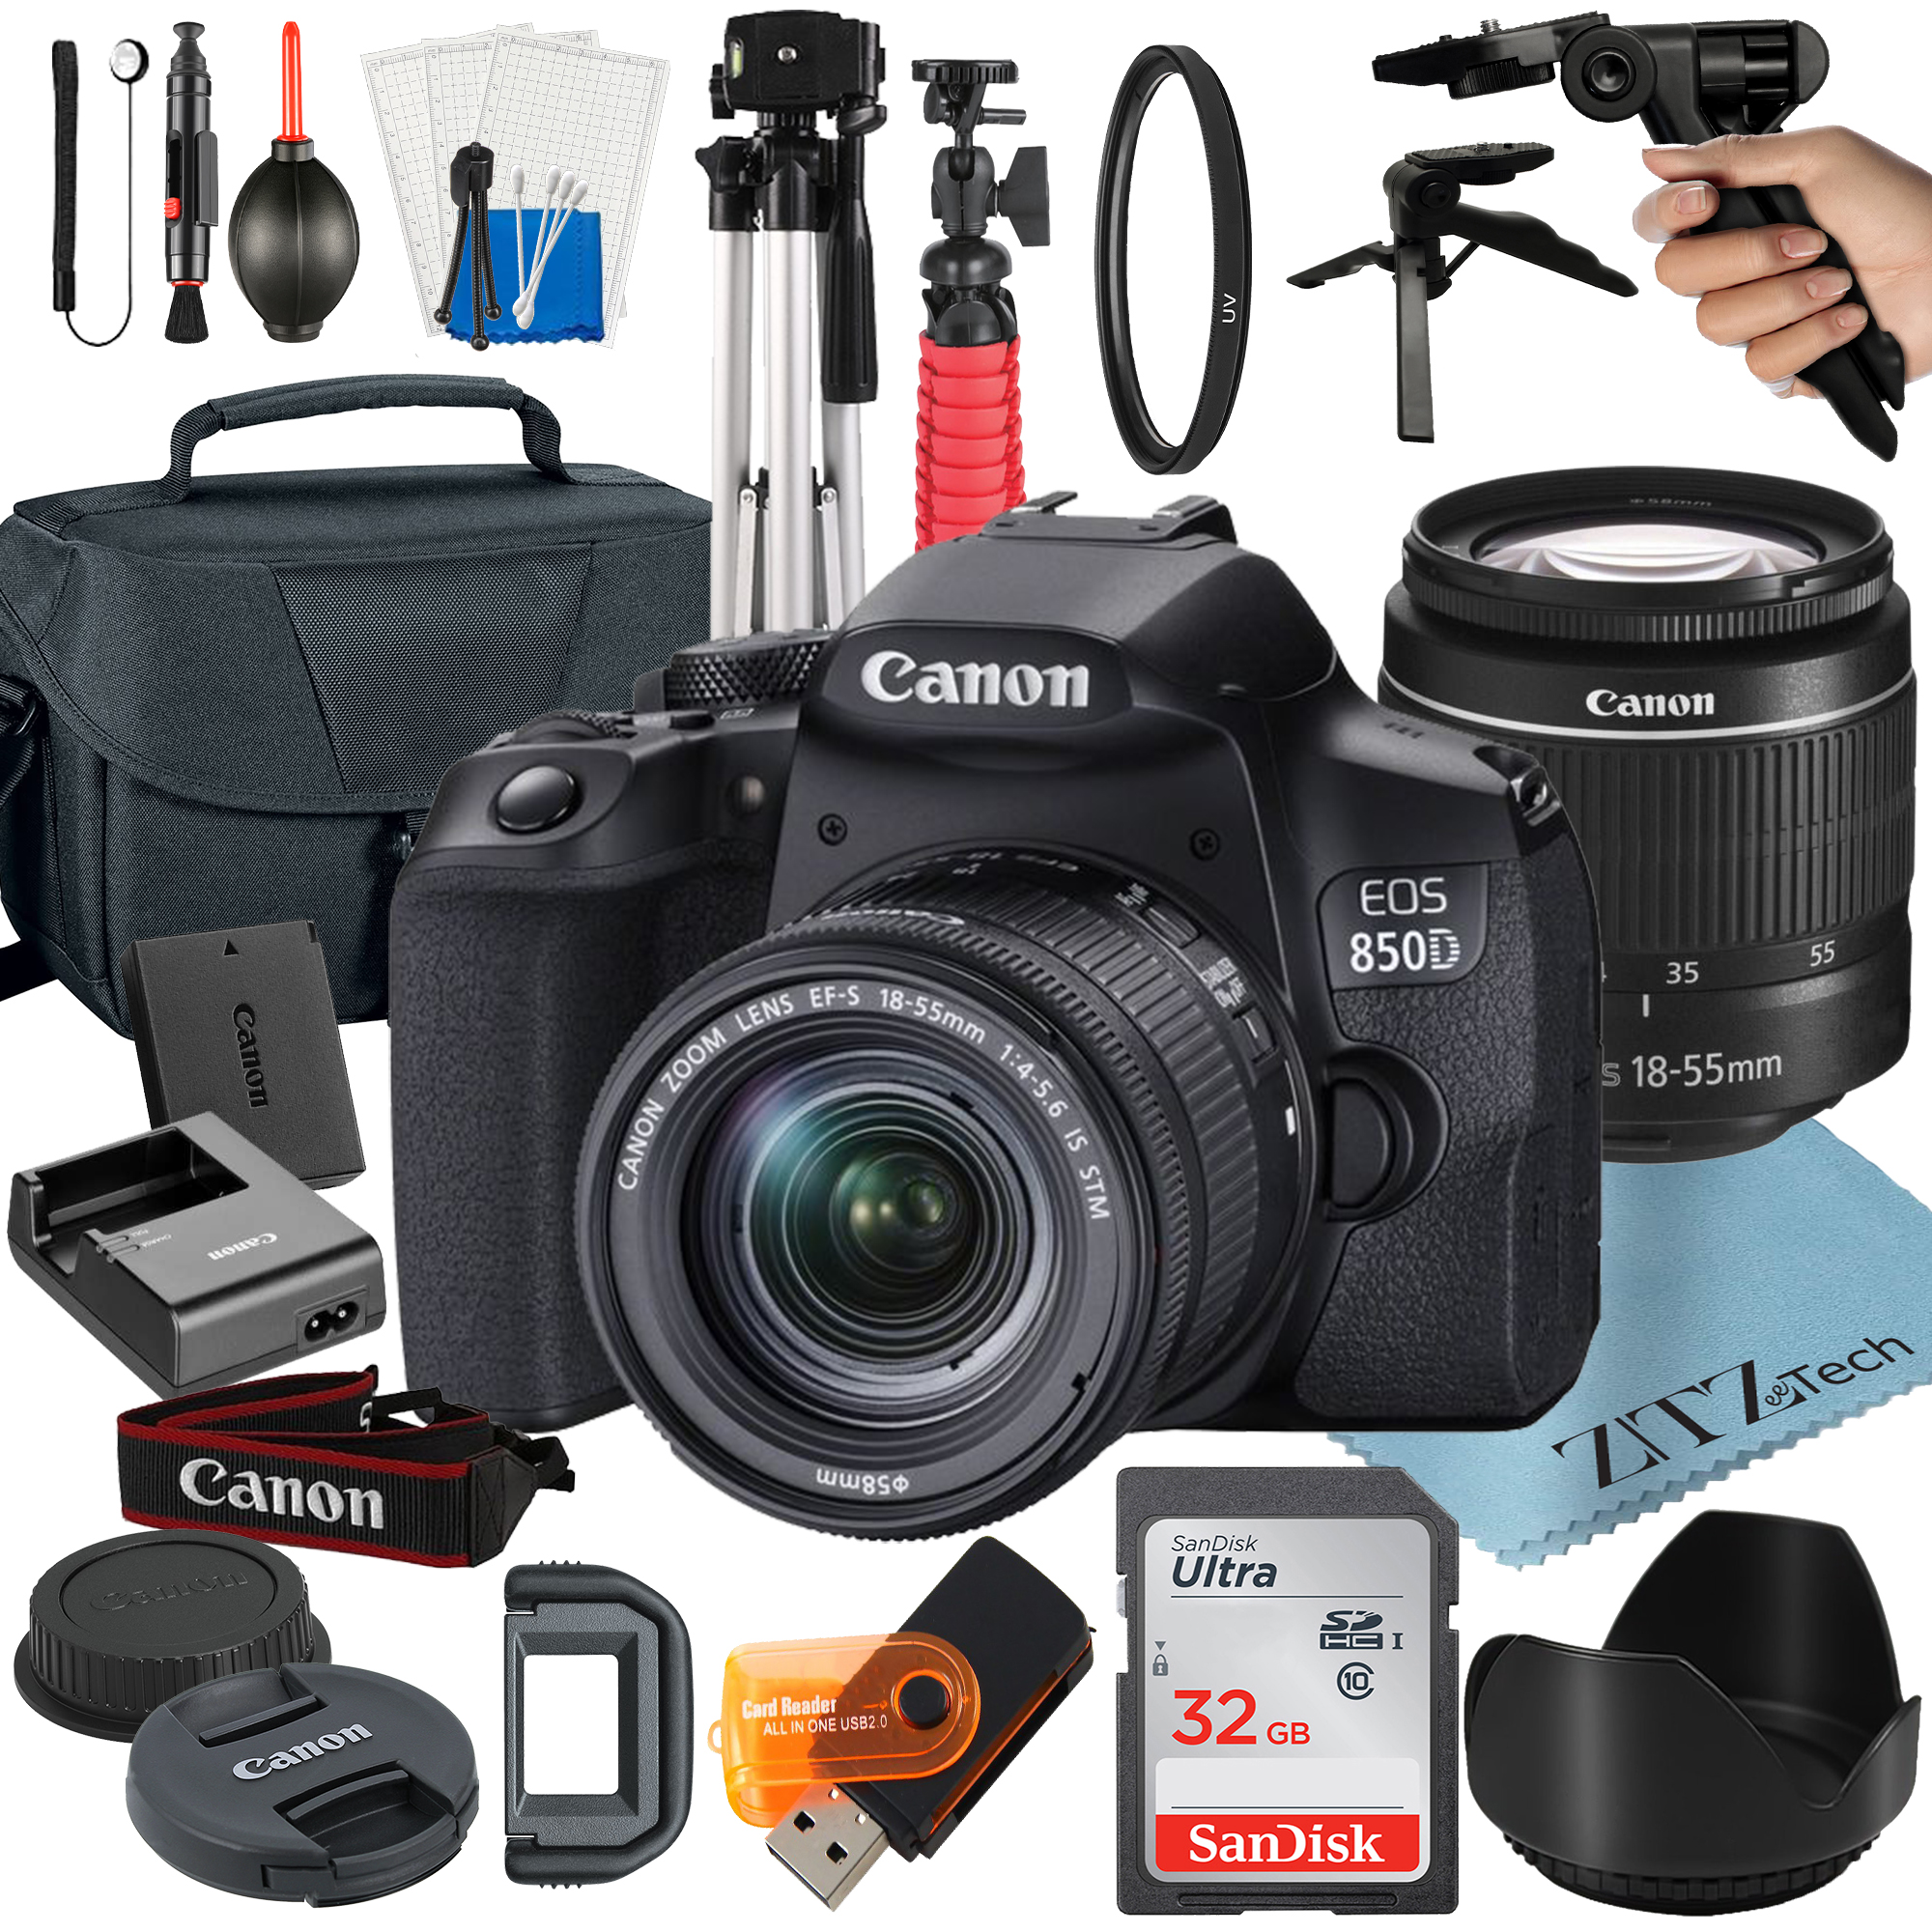 Canon EOS 850D / Rebel T8i DSLR Camera Bundle with 18-55mm Zoom Lens + 32GB SanDisk Card + Case + Tripod + ZeeTech Accessory